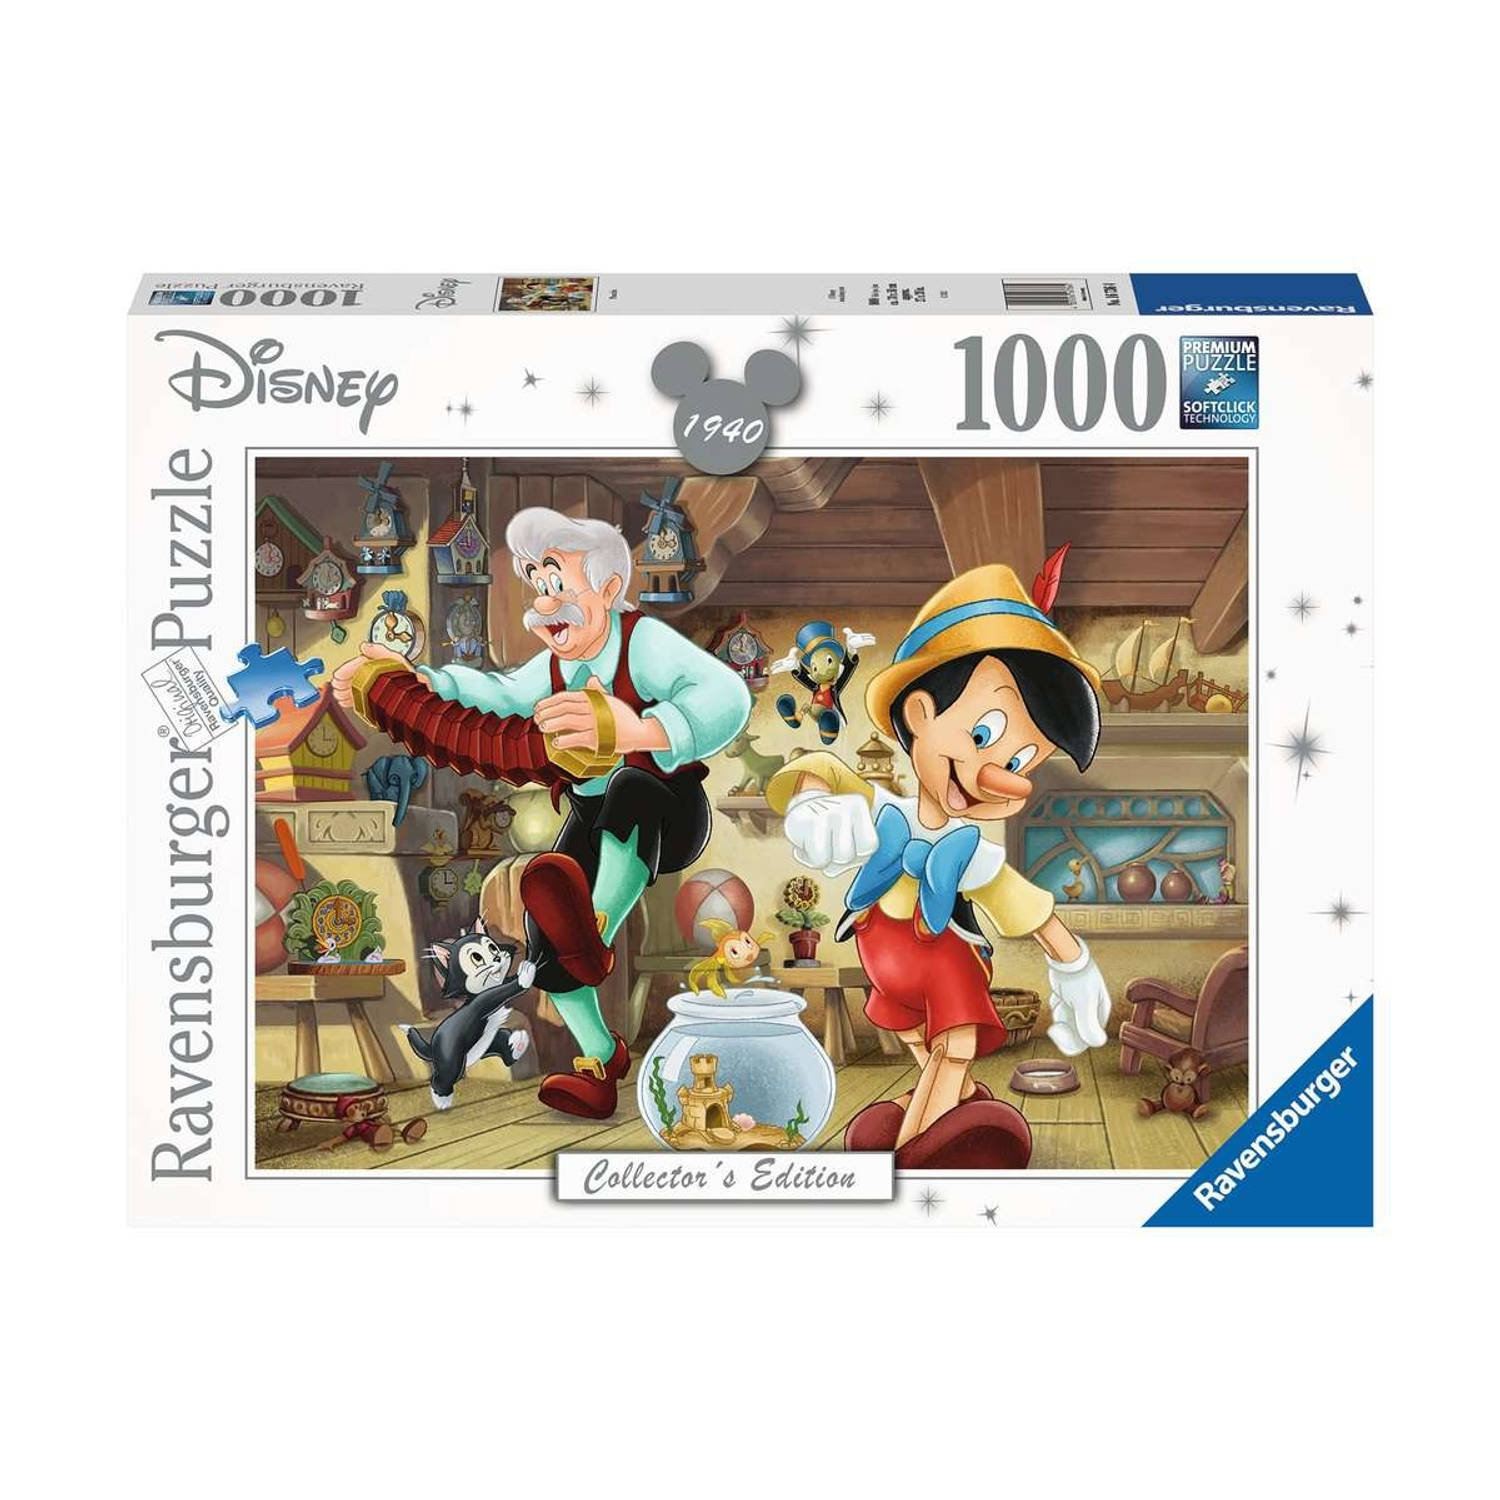 Disney Collector's Edition Jigsaw Puzzle Pinocchio (1000 pieces)